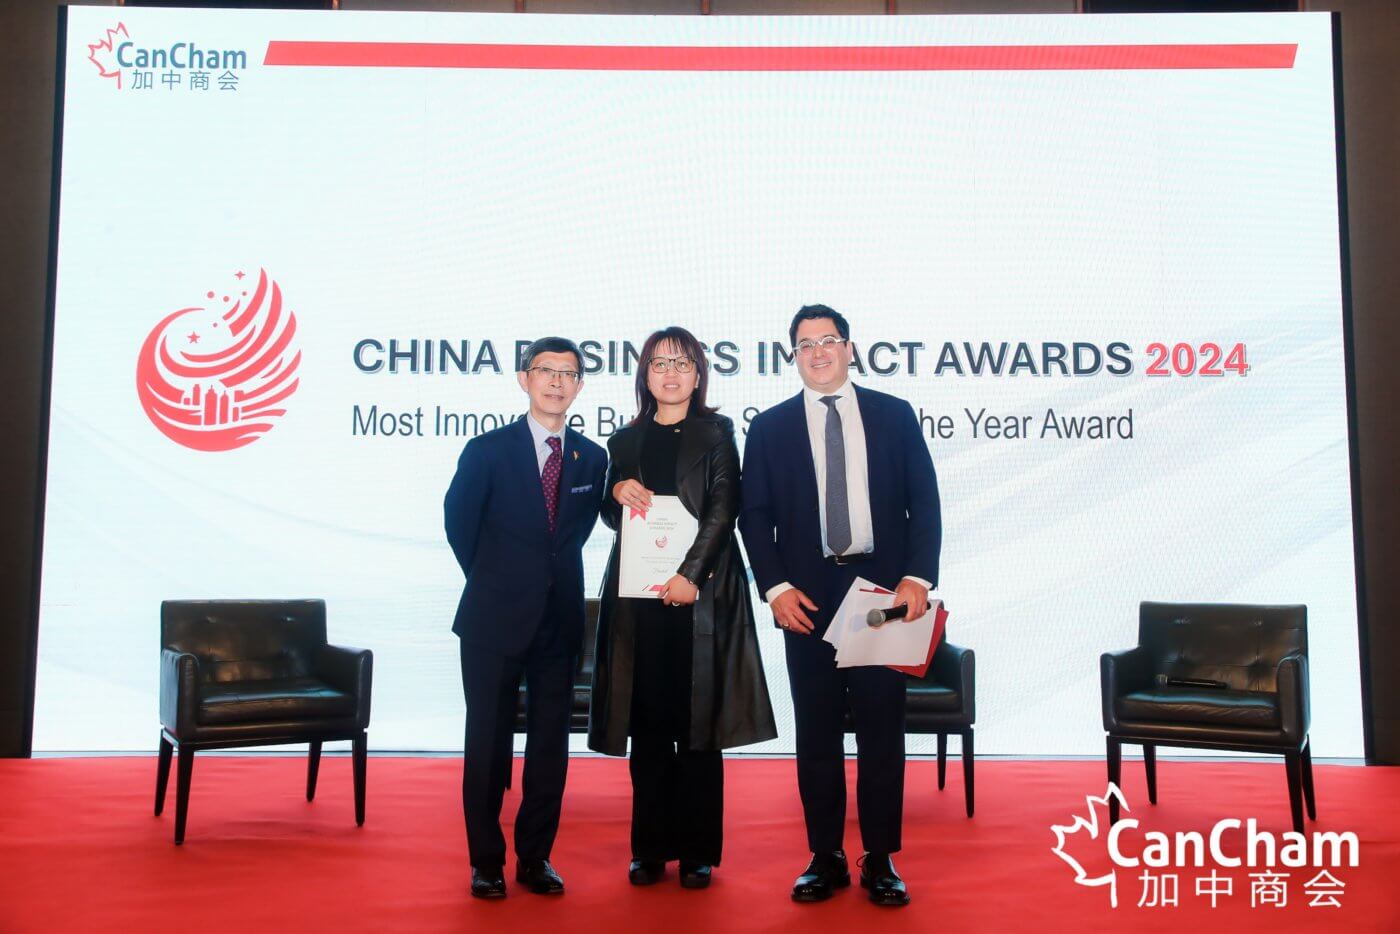 The China Business Impact Awards